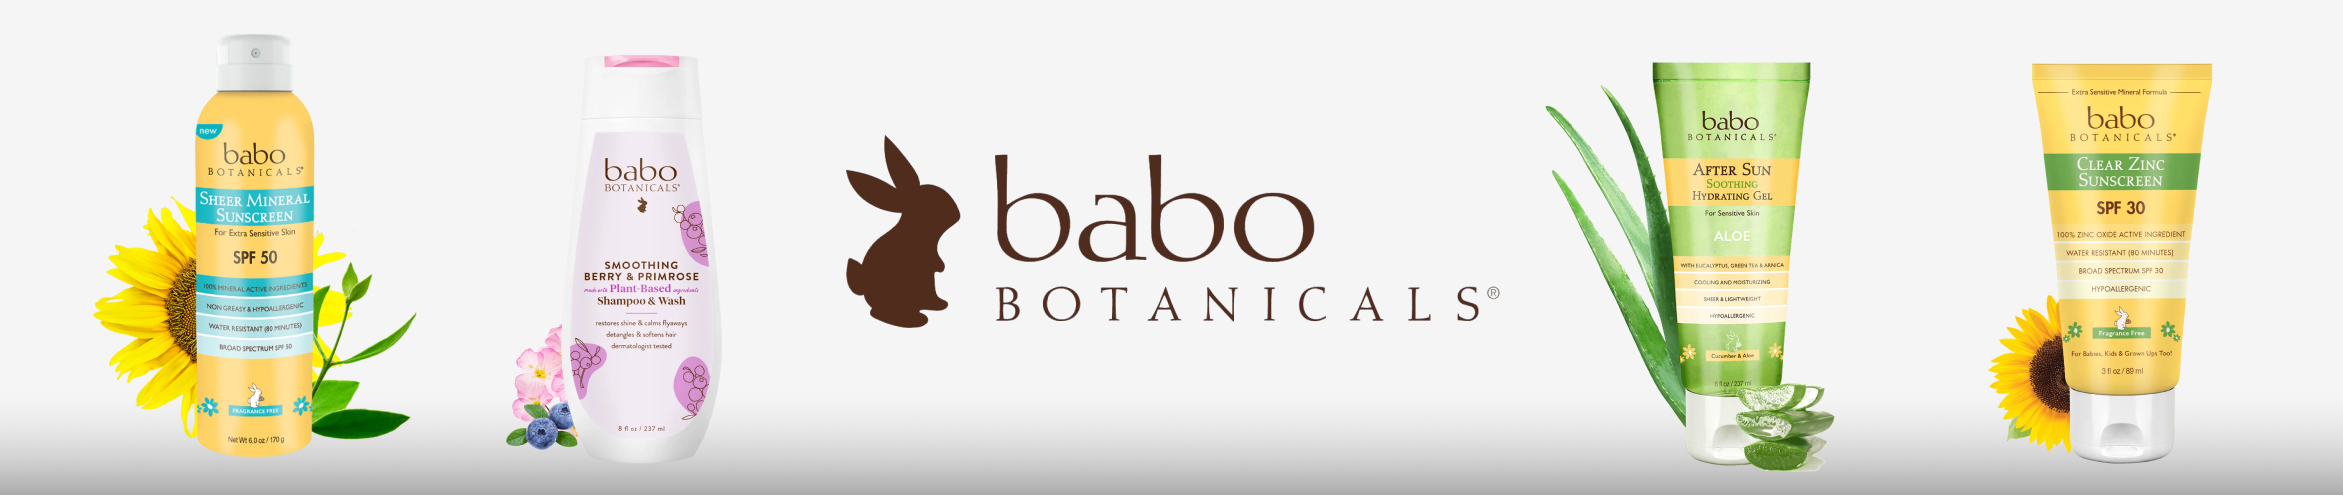 Babo Botanicals - Hair Care